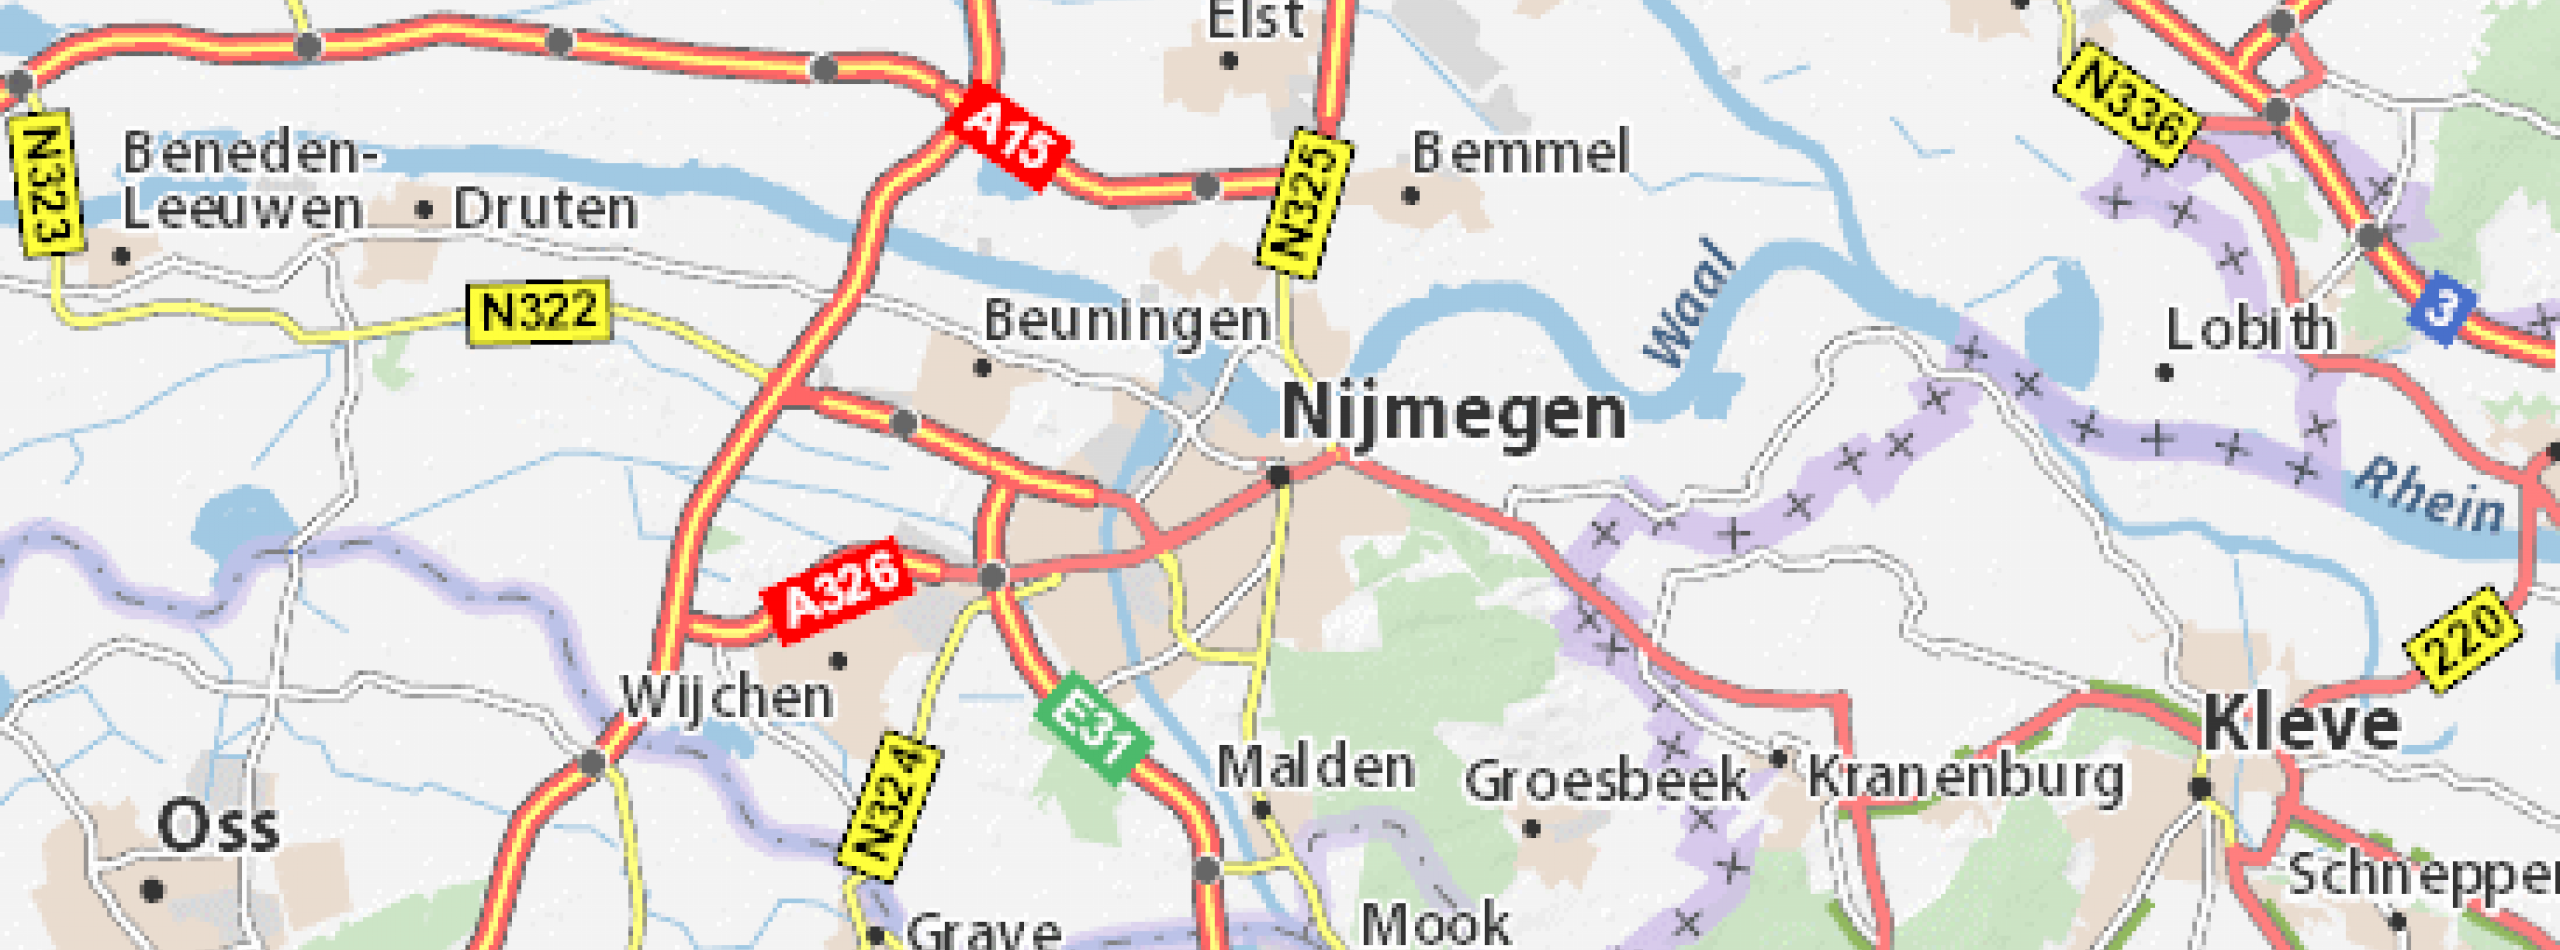 Nijmegen City Marketing